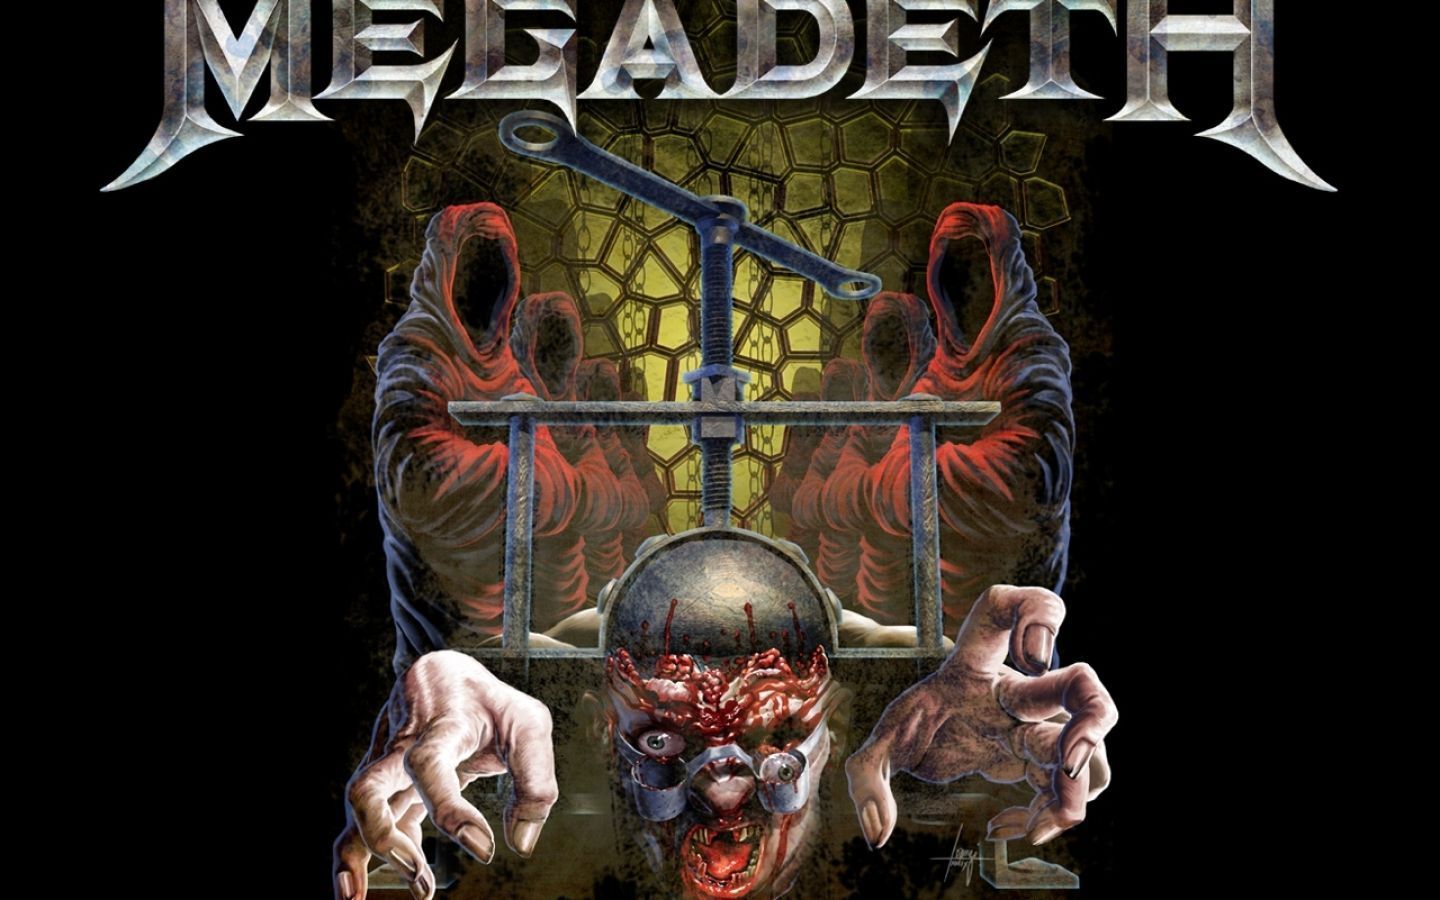 Megadeth - Megadeth Wallpaper (24755371) - Fanpop